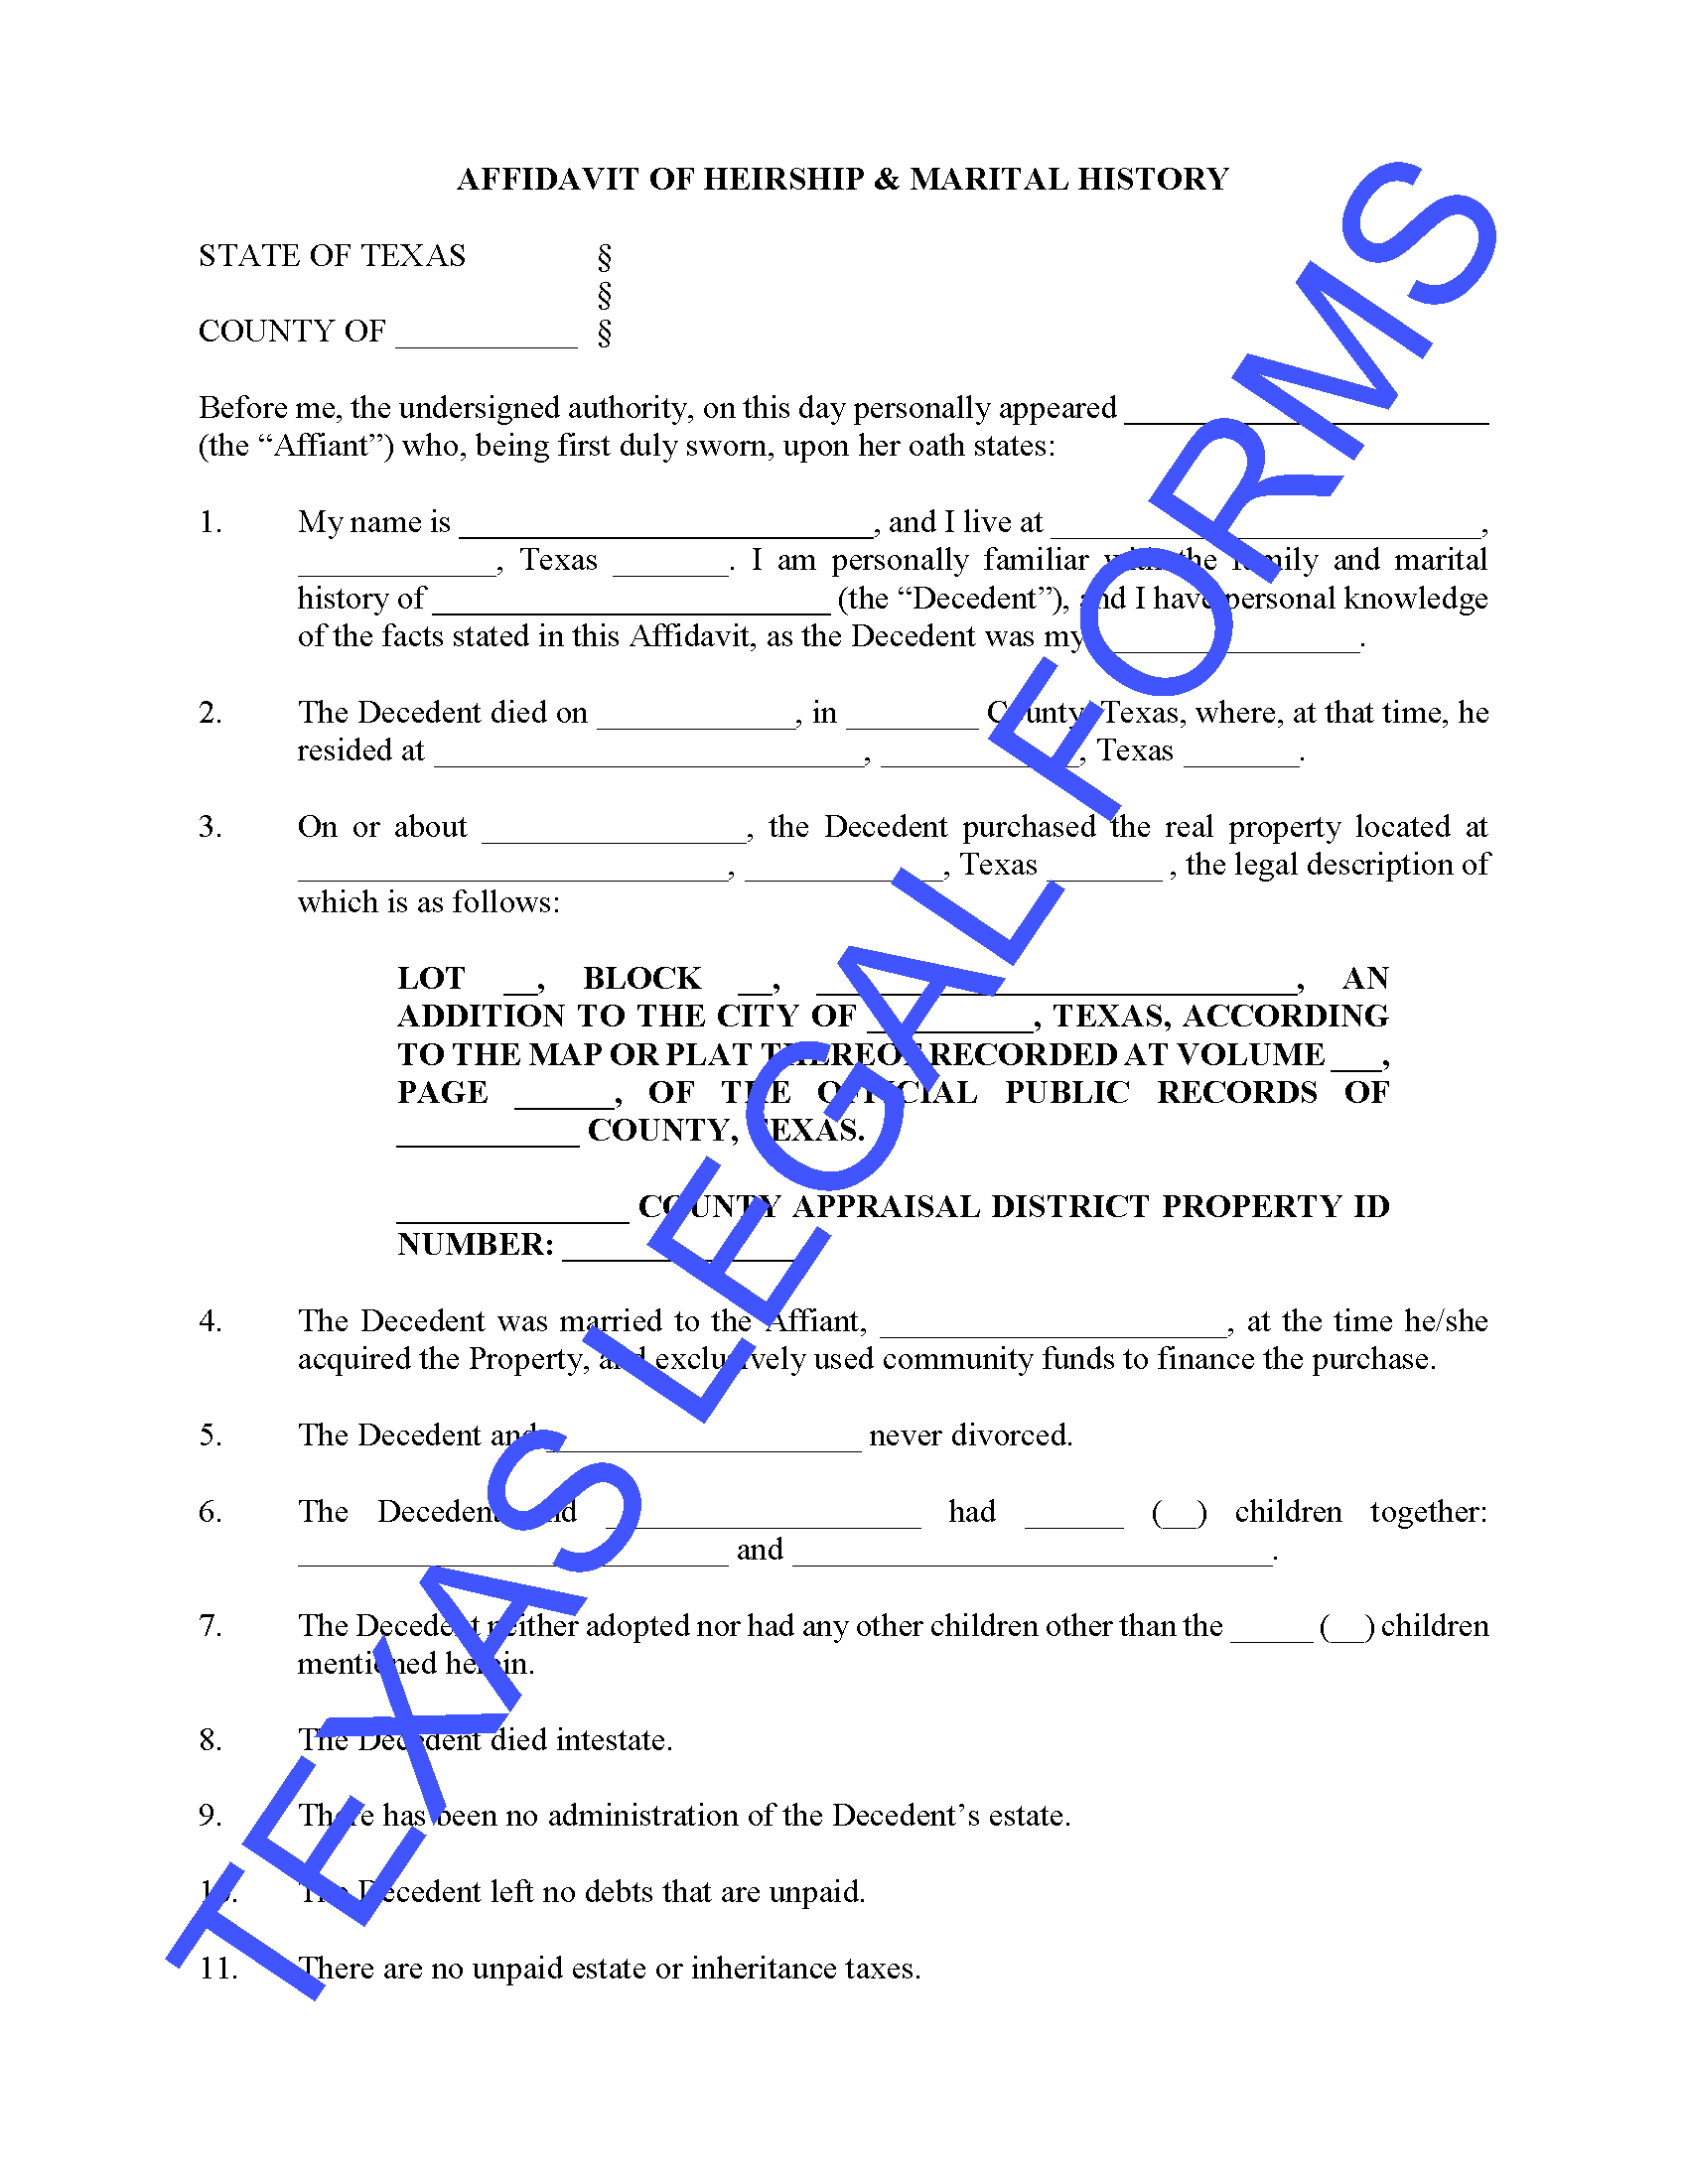 texas-affidavit-of-heirship-marital-status-form-order-probate-legal